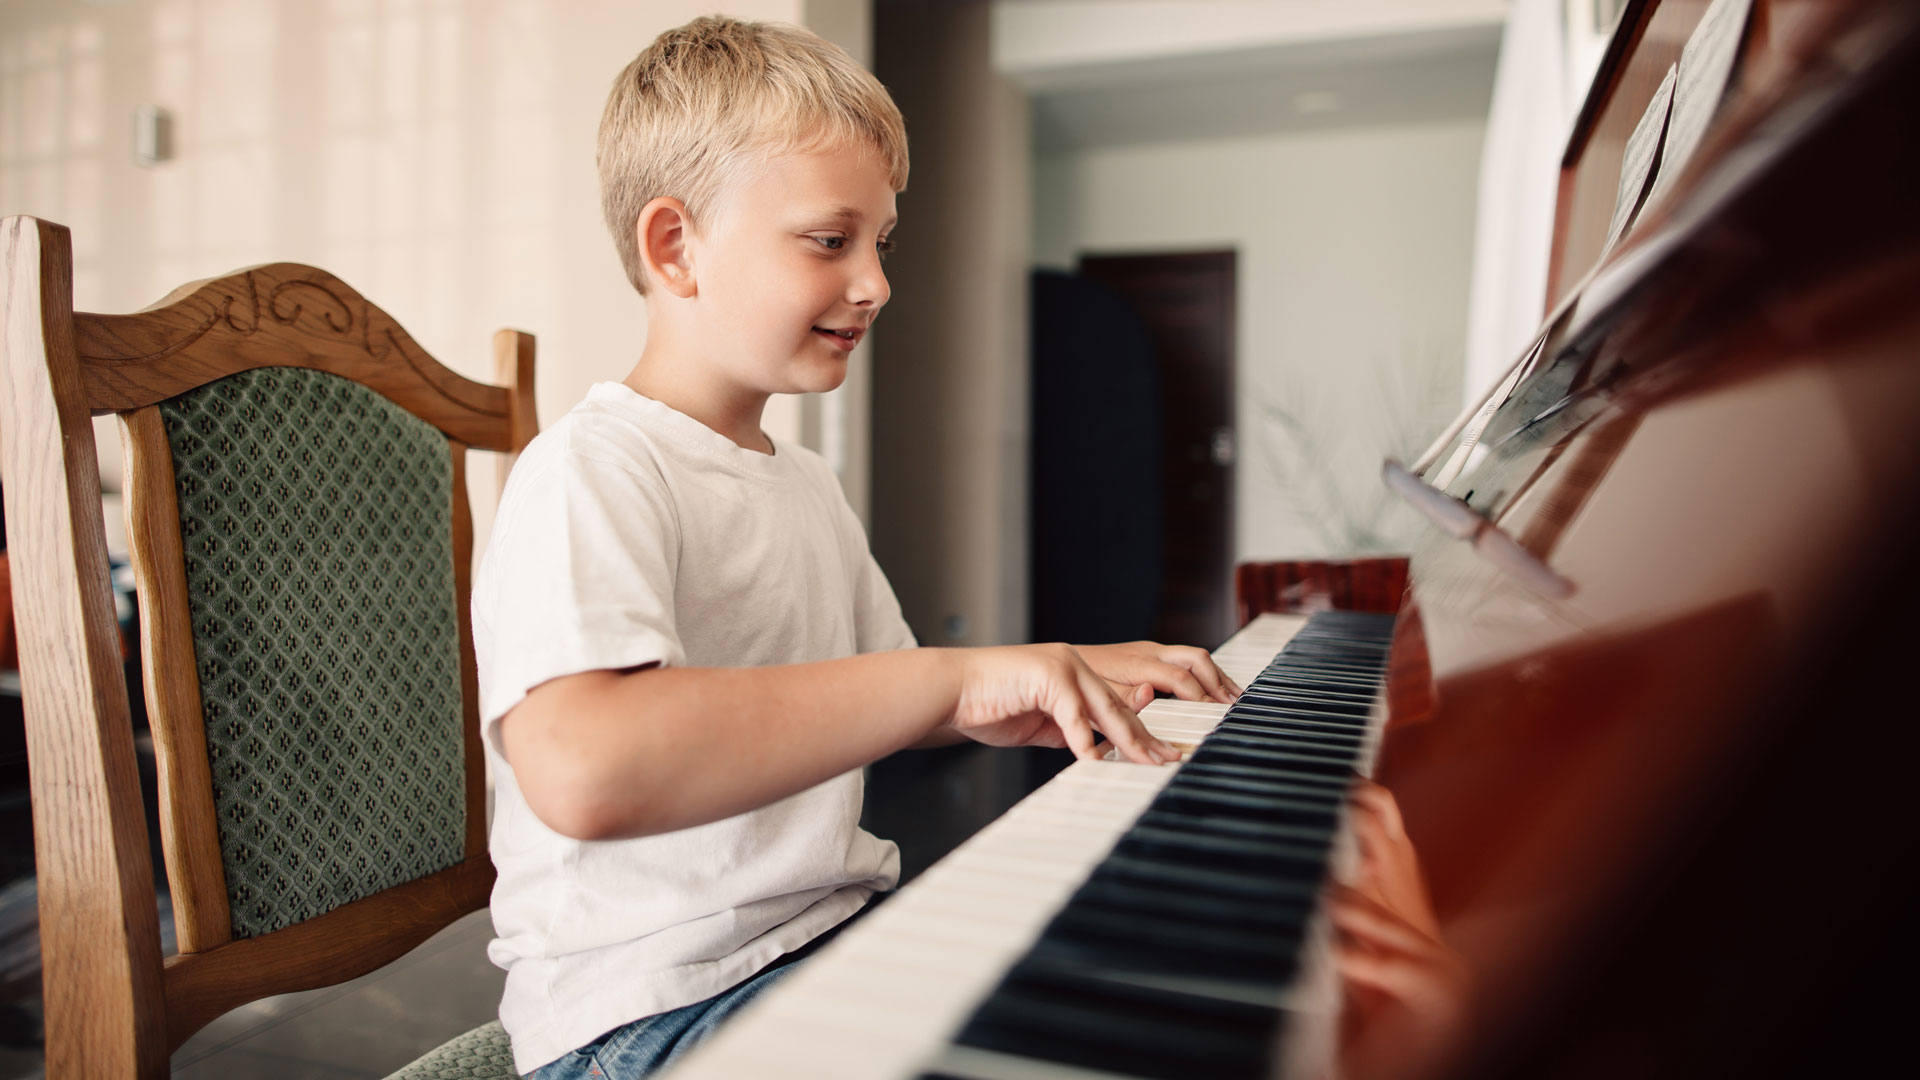 blonde boy playing piano